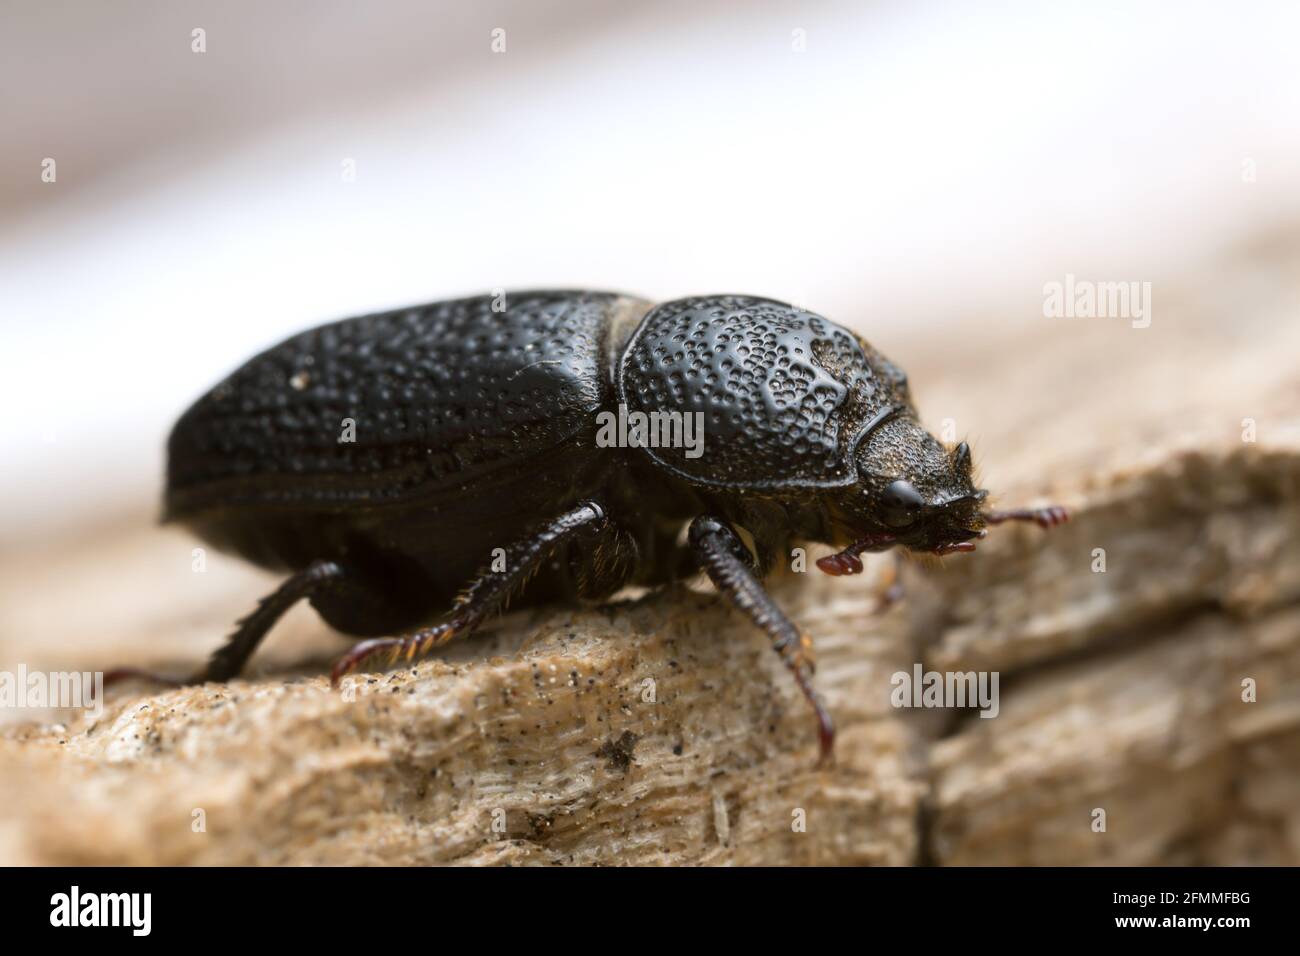 Male rhinoceros beetle, Sinodendron cylindricum on wood Stock Photo